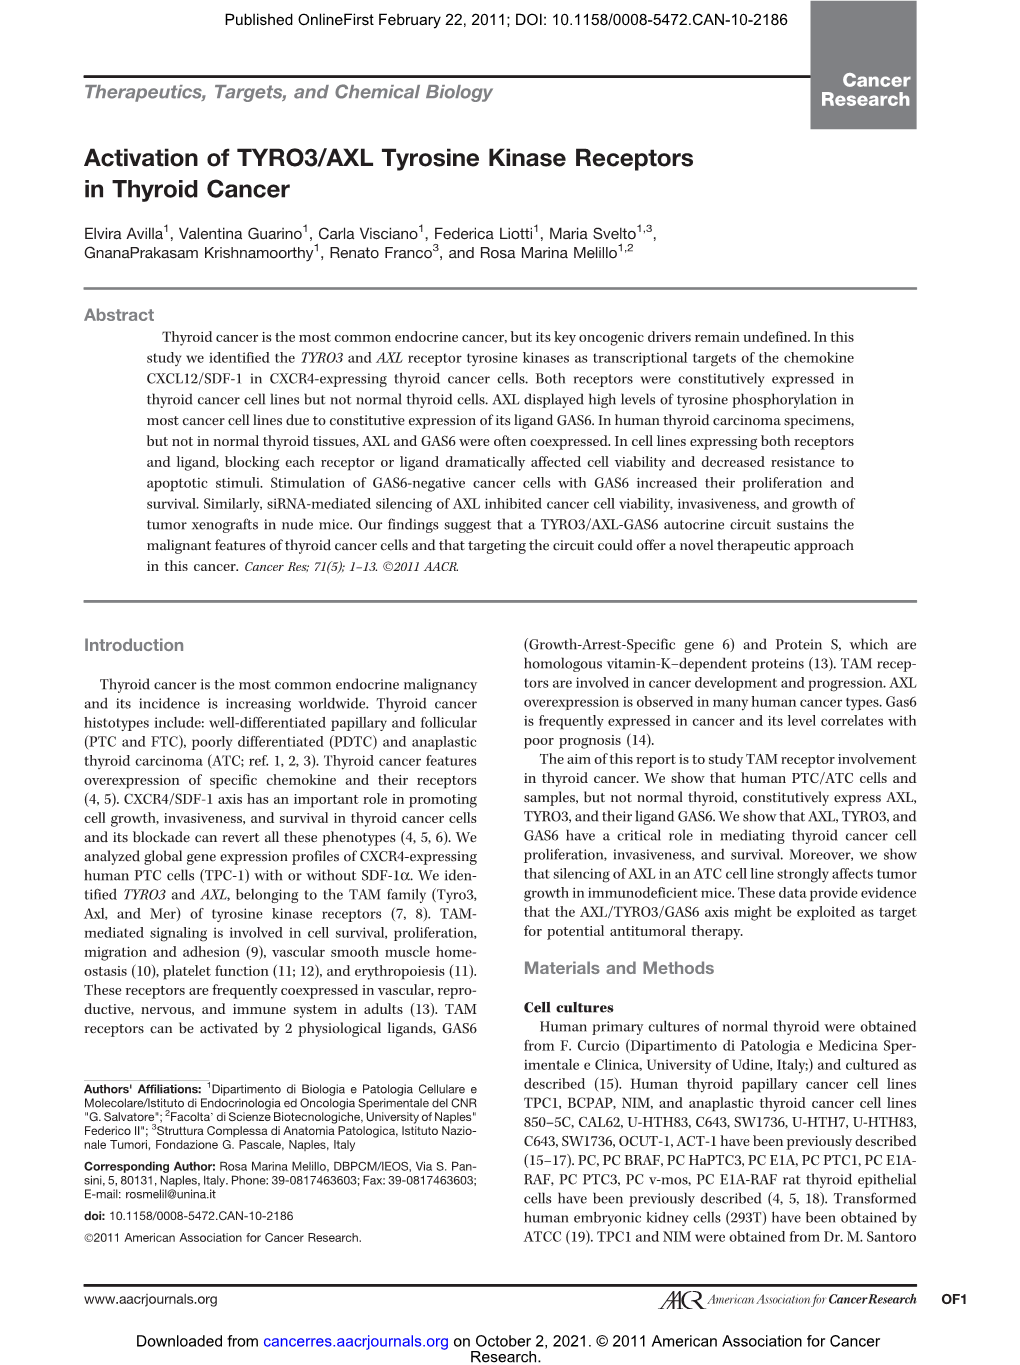 Activation of TYRO3/AXL Tyrosine Kinase Receptors in Thyroid Cancer